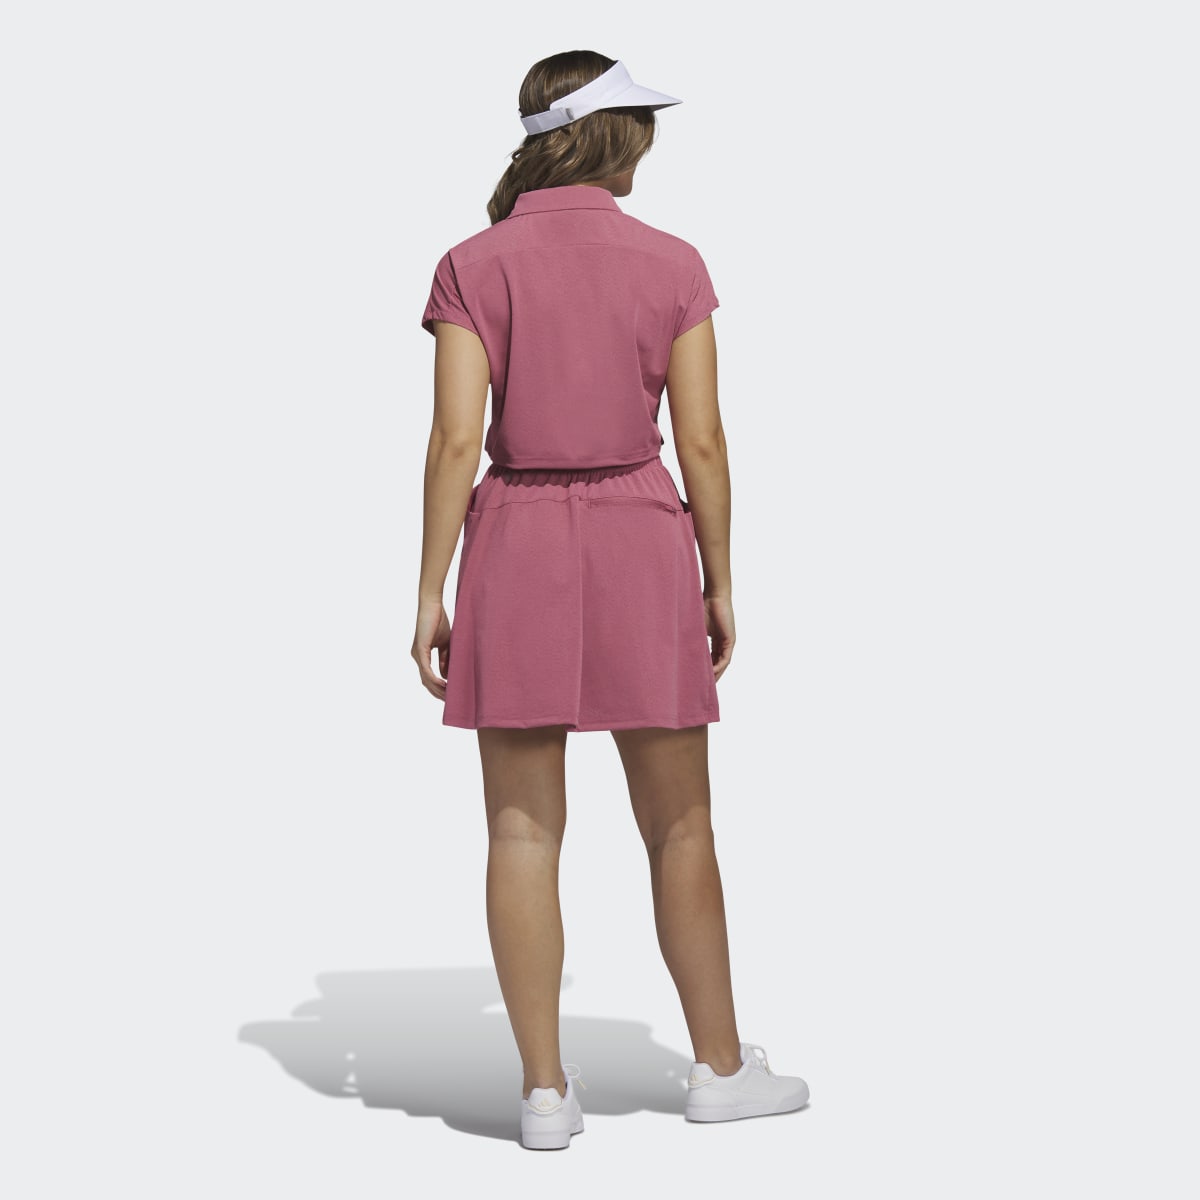 Adidas Go-To Golf Dress. 7